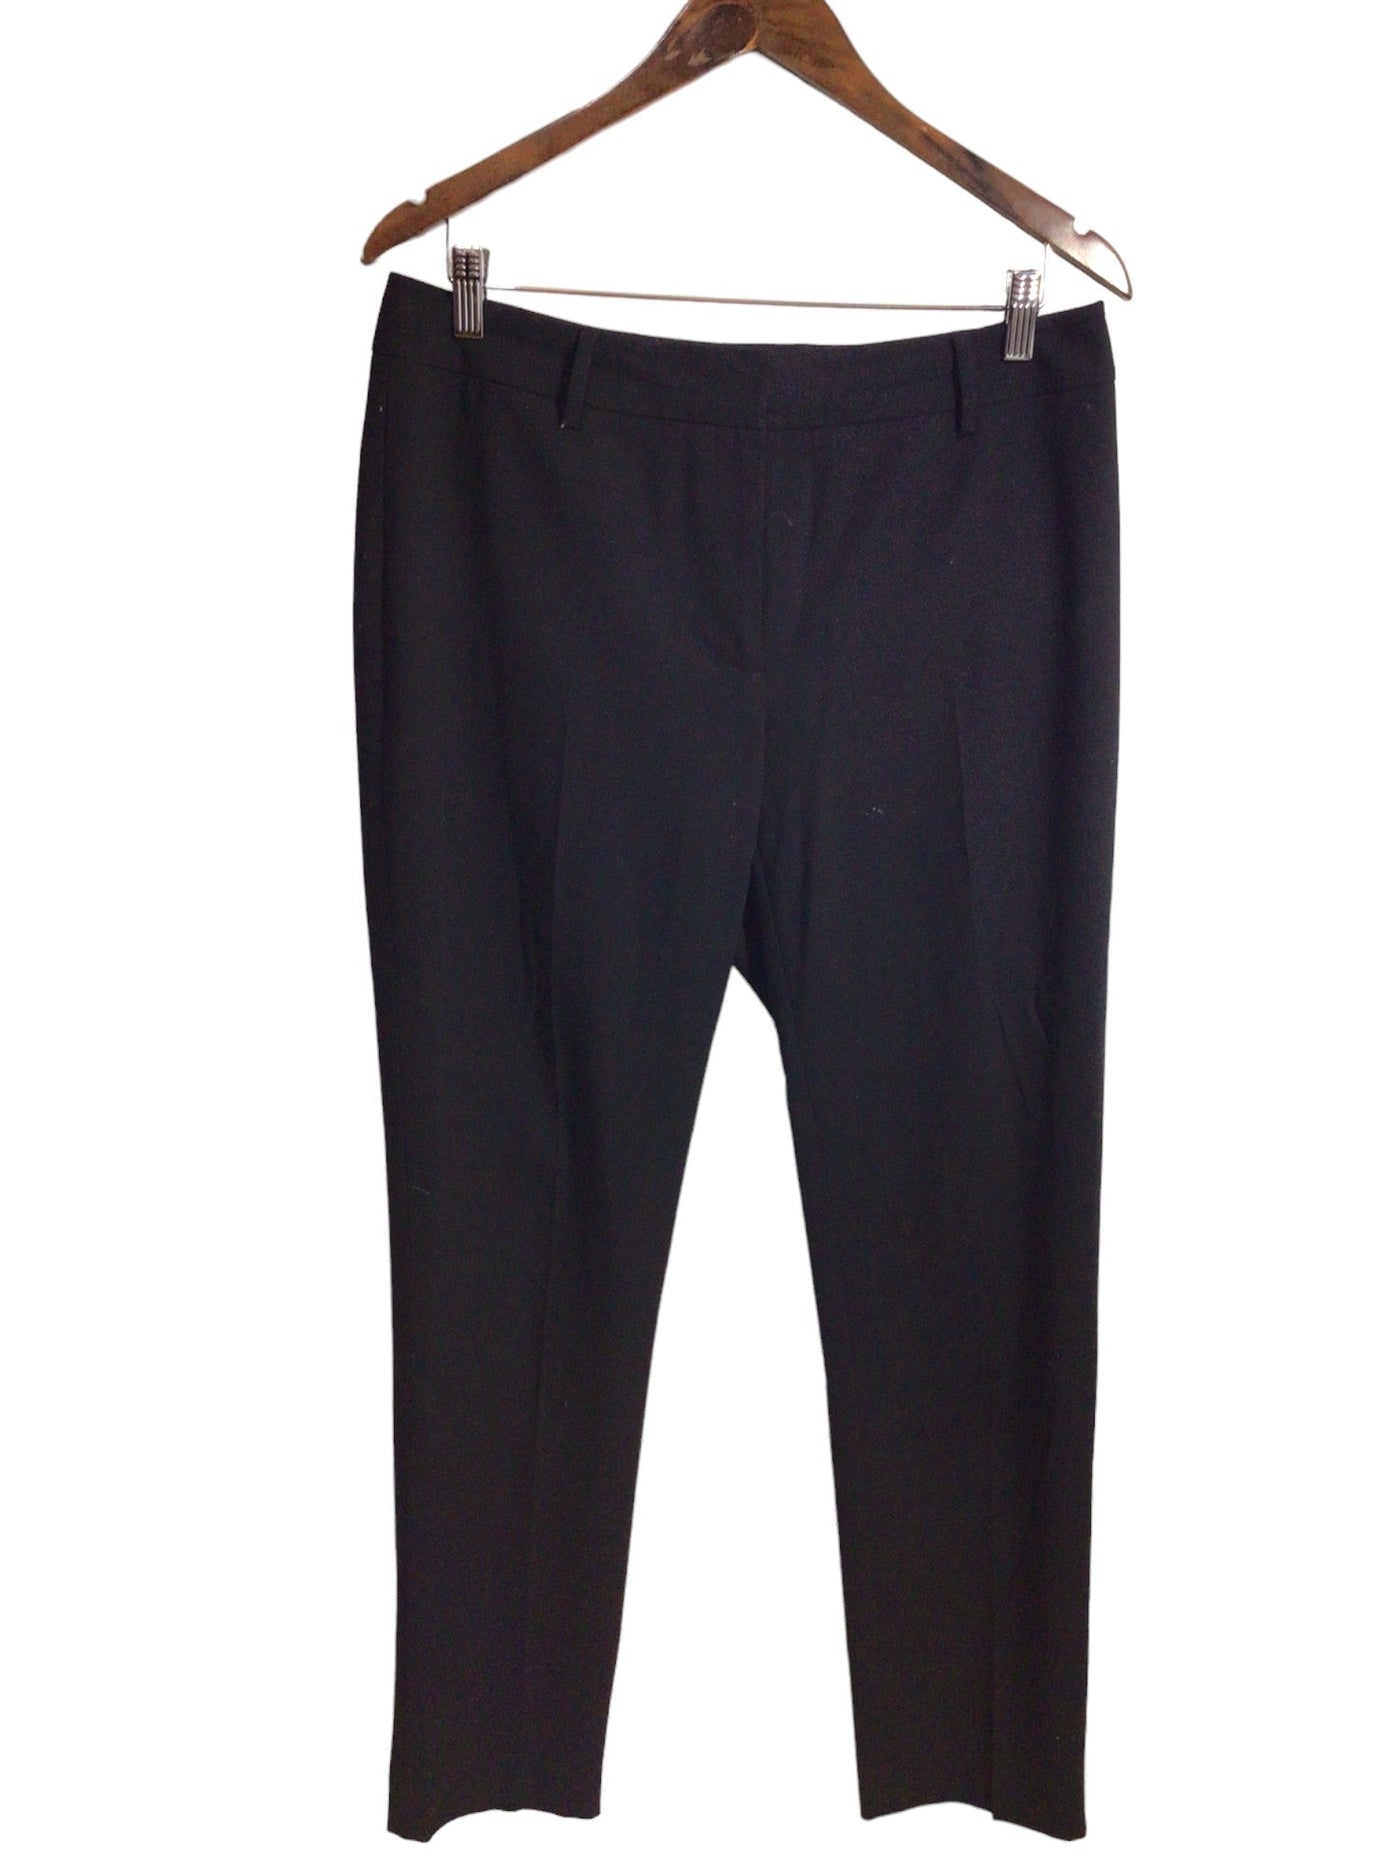 CALVIN KLEIN Women Work Pants Regular fit in Black - Size 8 | 21.5 $ KOOP